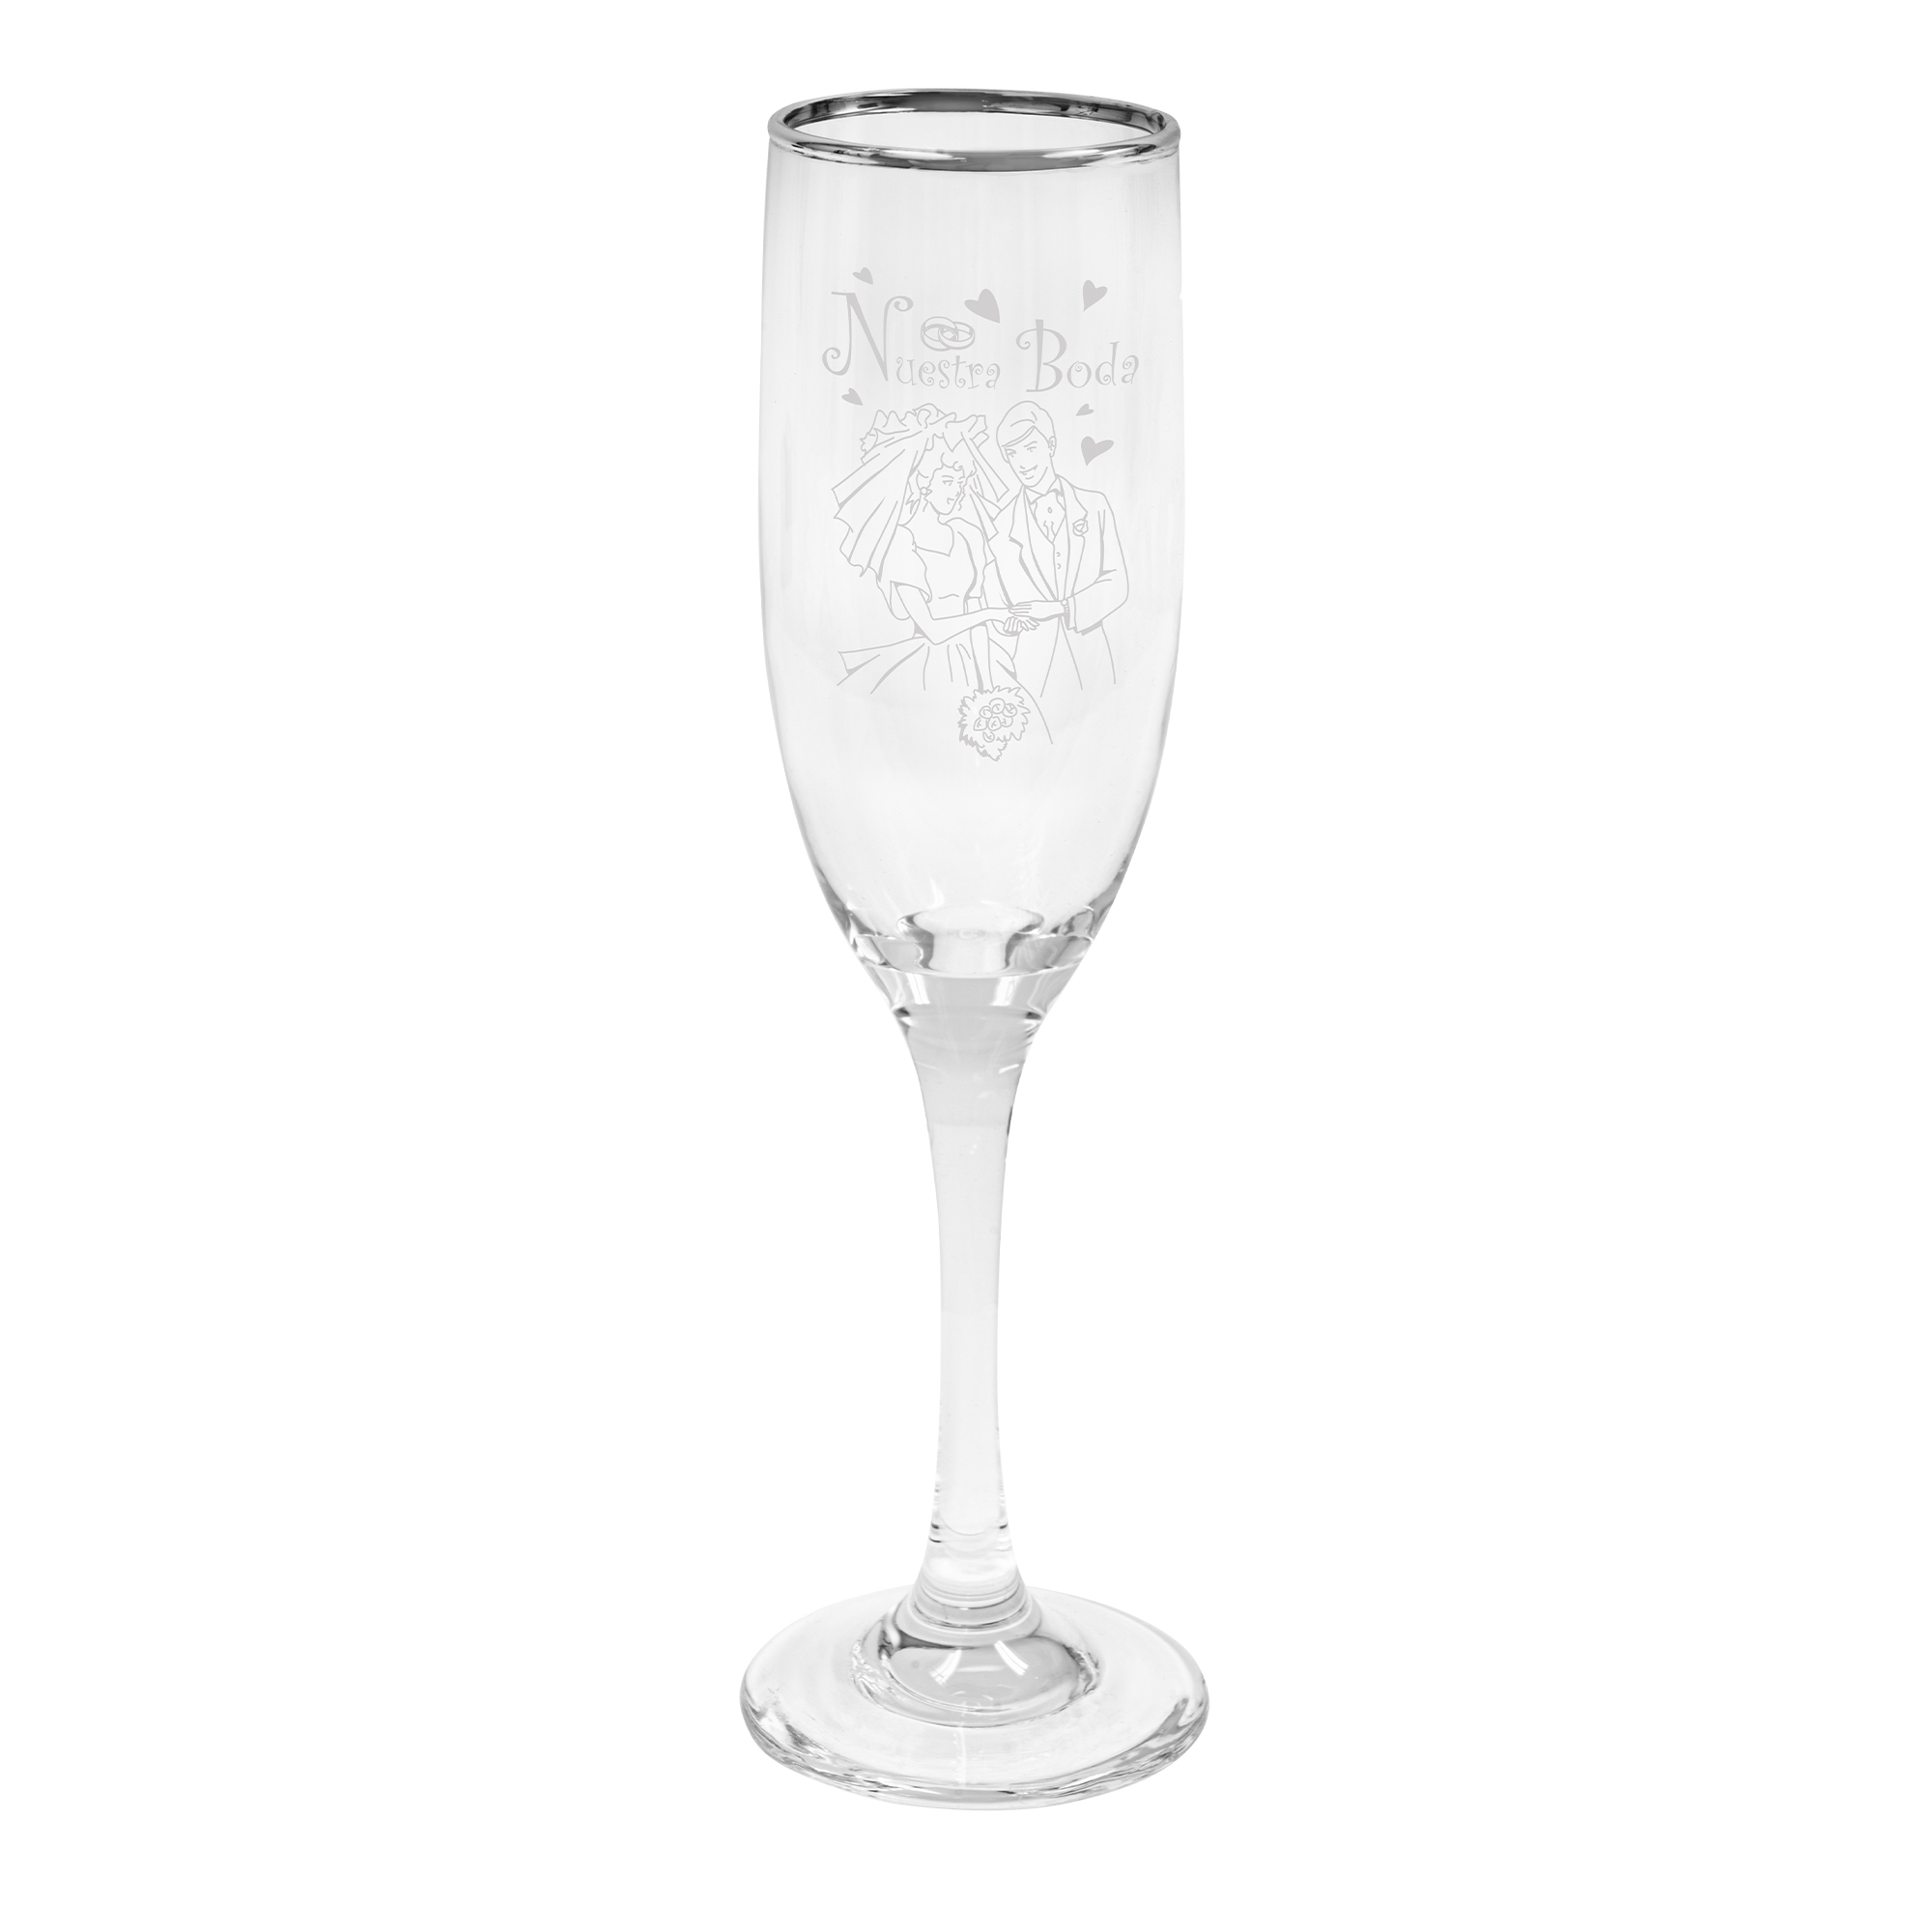 Glass Champagne Flutes Silver Rim- "Nuestra Boda" Set of 6pcs